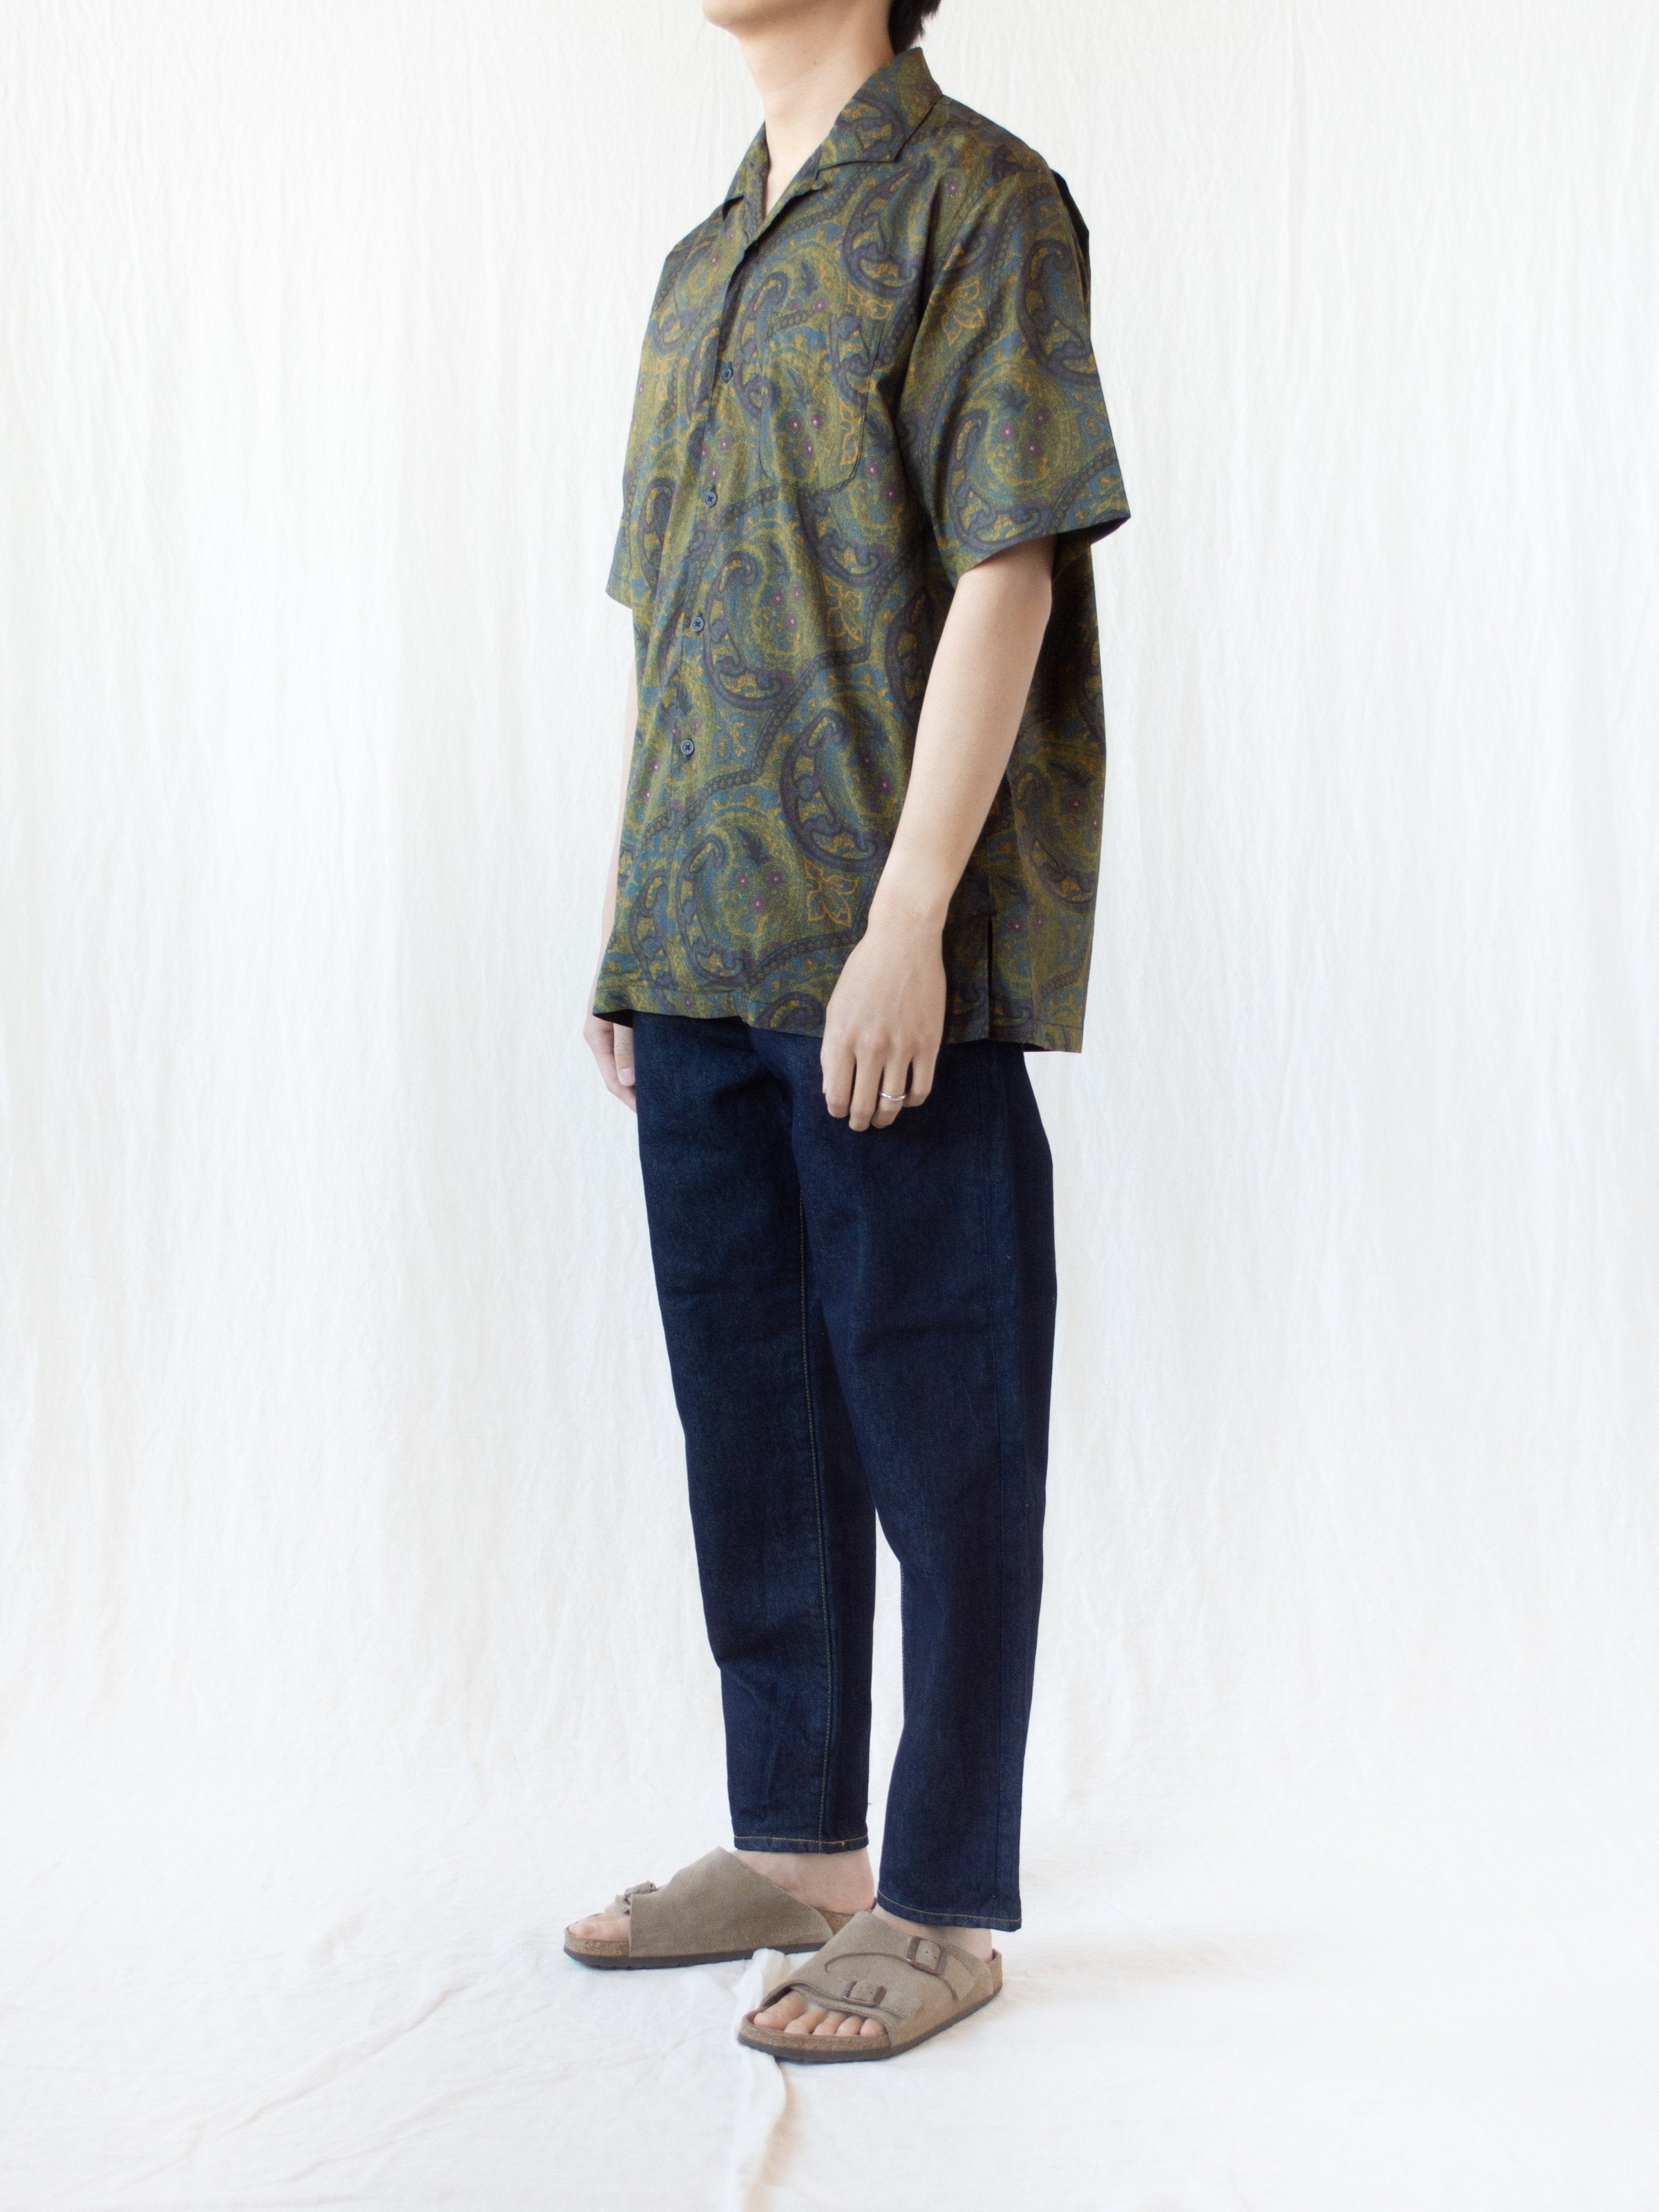 Namu Shop - Kaptain Sunshine Open Collar S/S Shirt - Hand Printed Dark Paisley